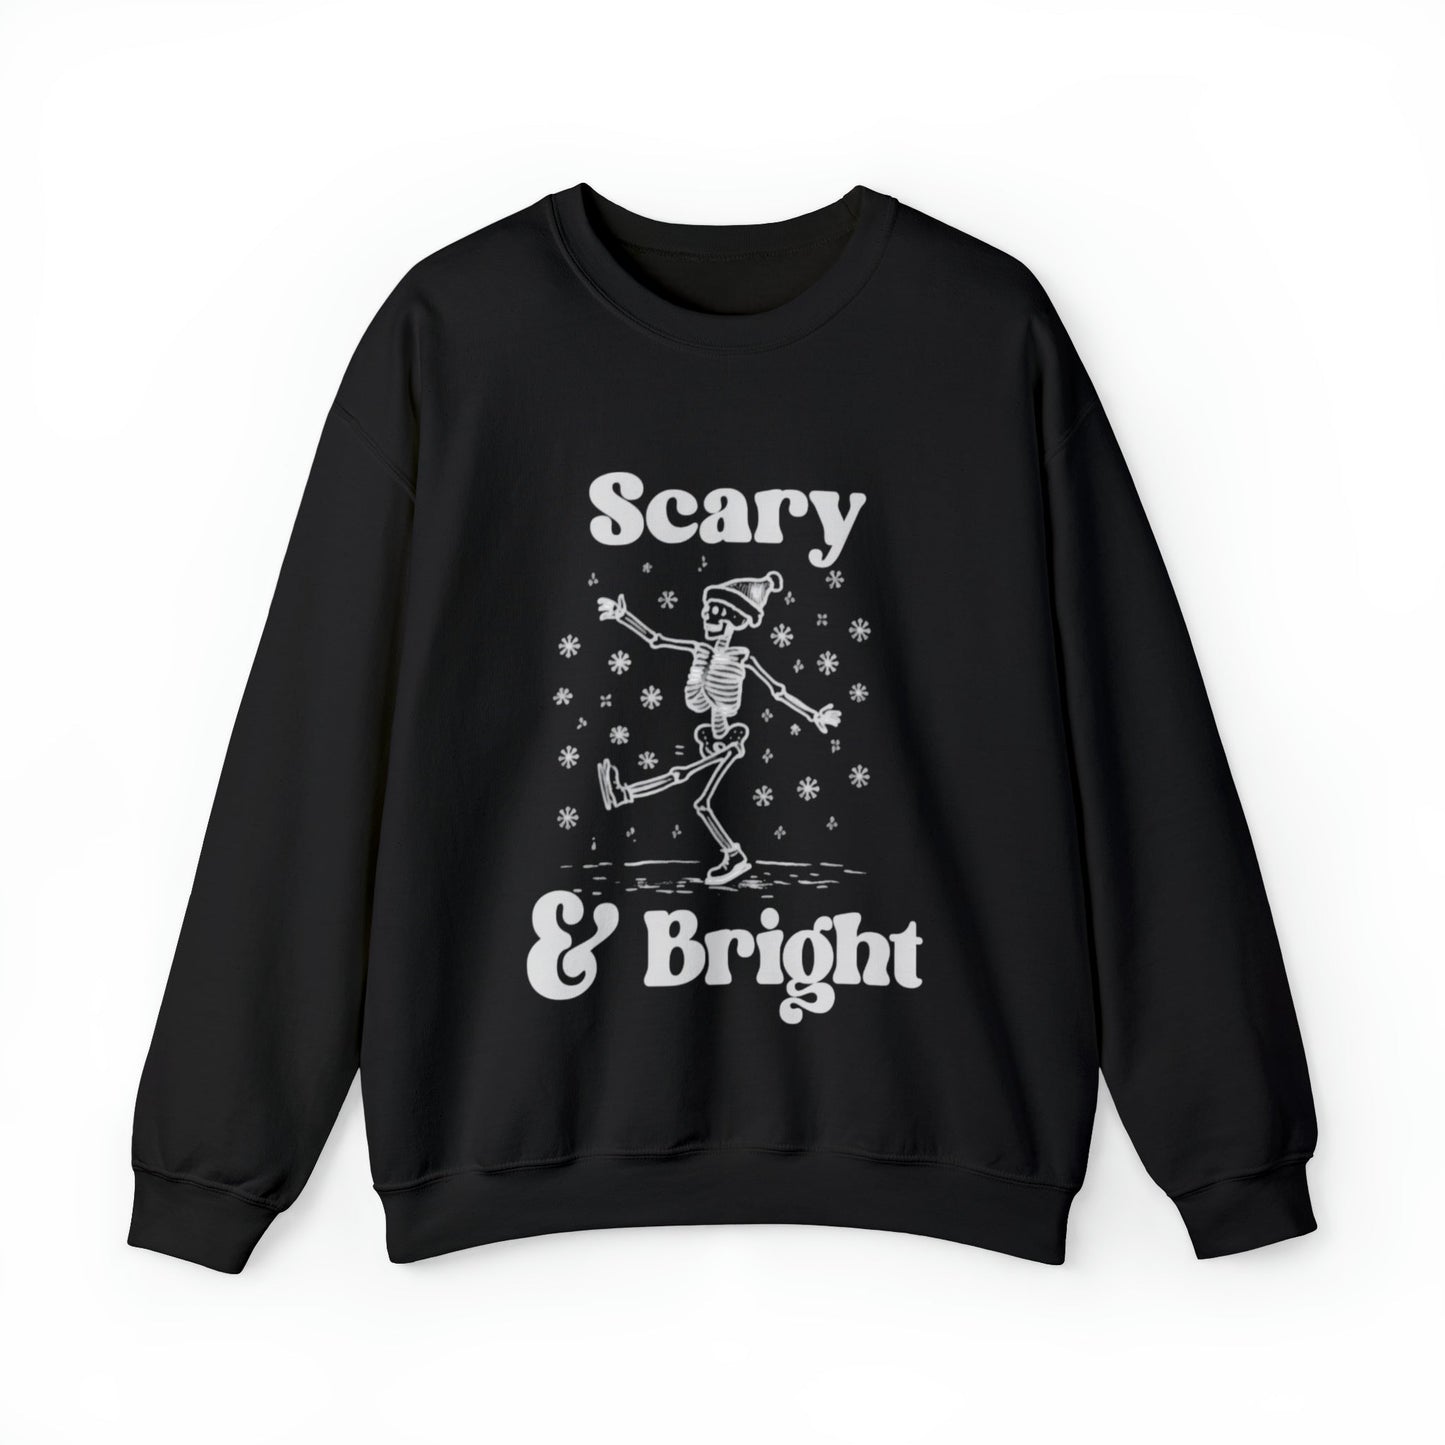 Scary and Bright Pullover Crewneck SweatshirtSweatshirtVTZdesignsSBlackchristmasclothingCrew neck